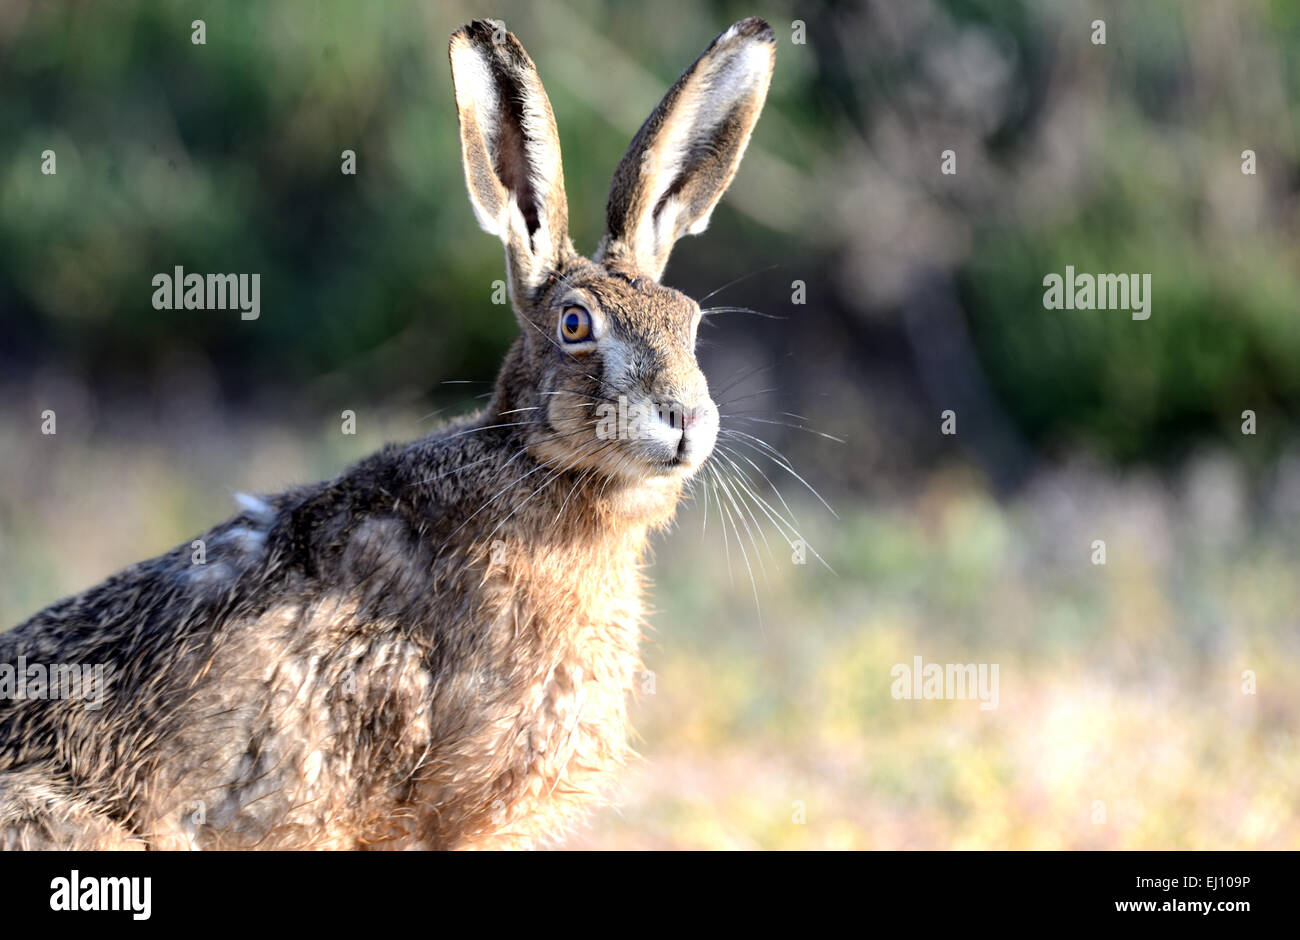 Hare, Rabbit, Lepus europaeus Pallas, field hare, the, rodent, nature, wild animal, game, animal, Stock Photo